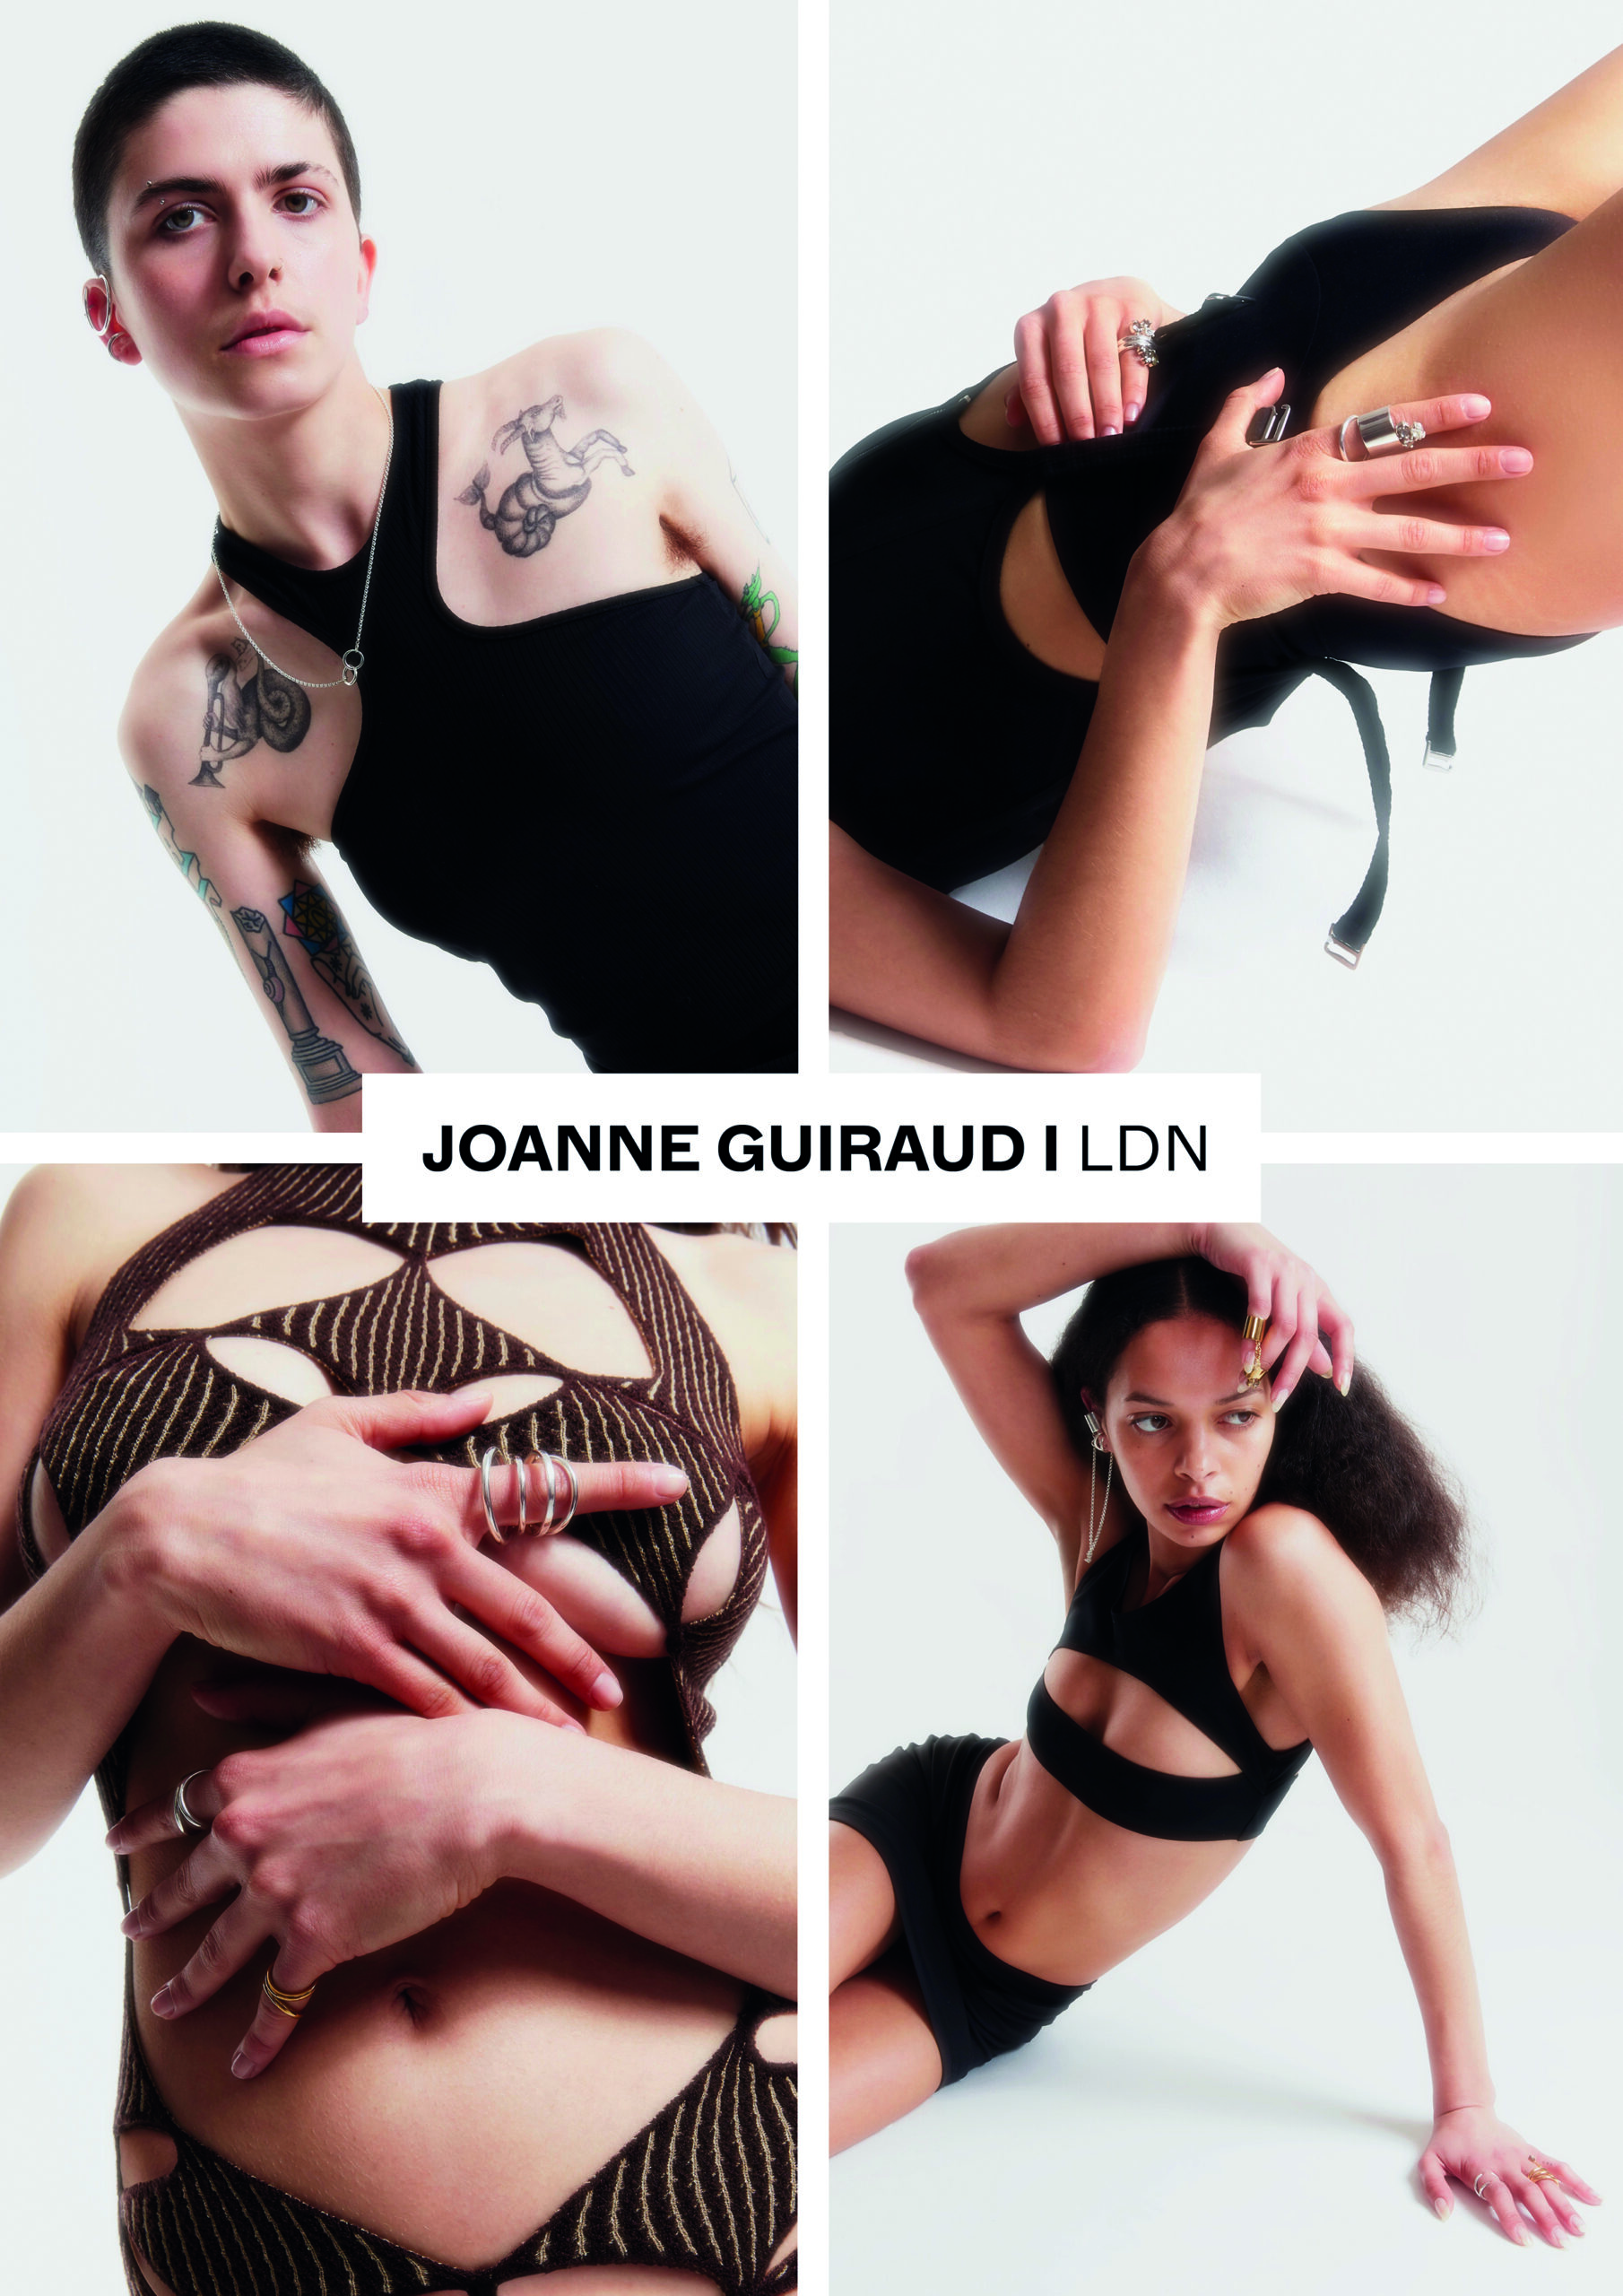 Joanne Guiraud I LDN